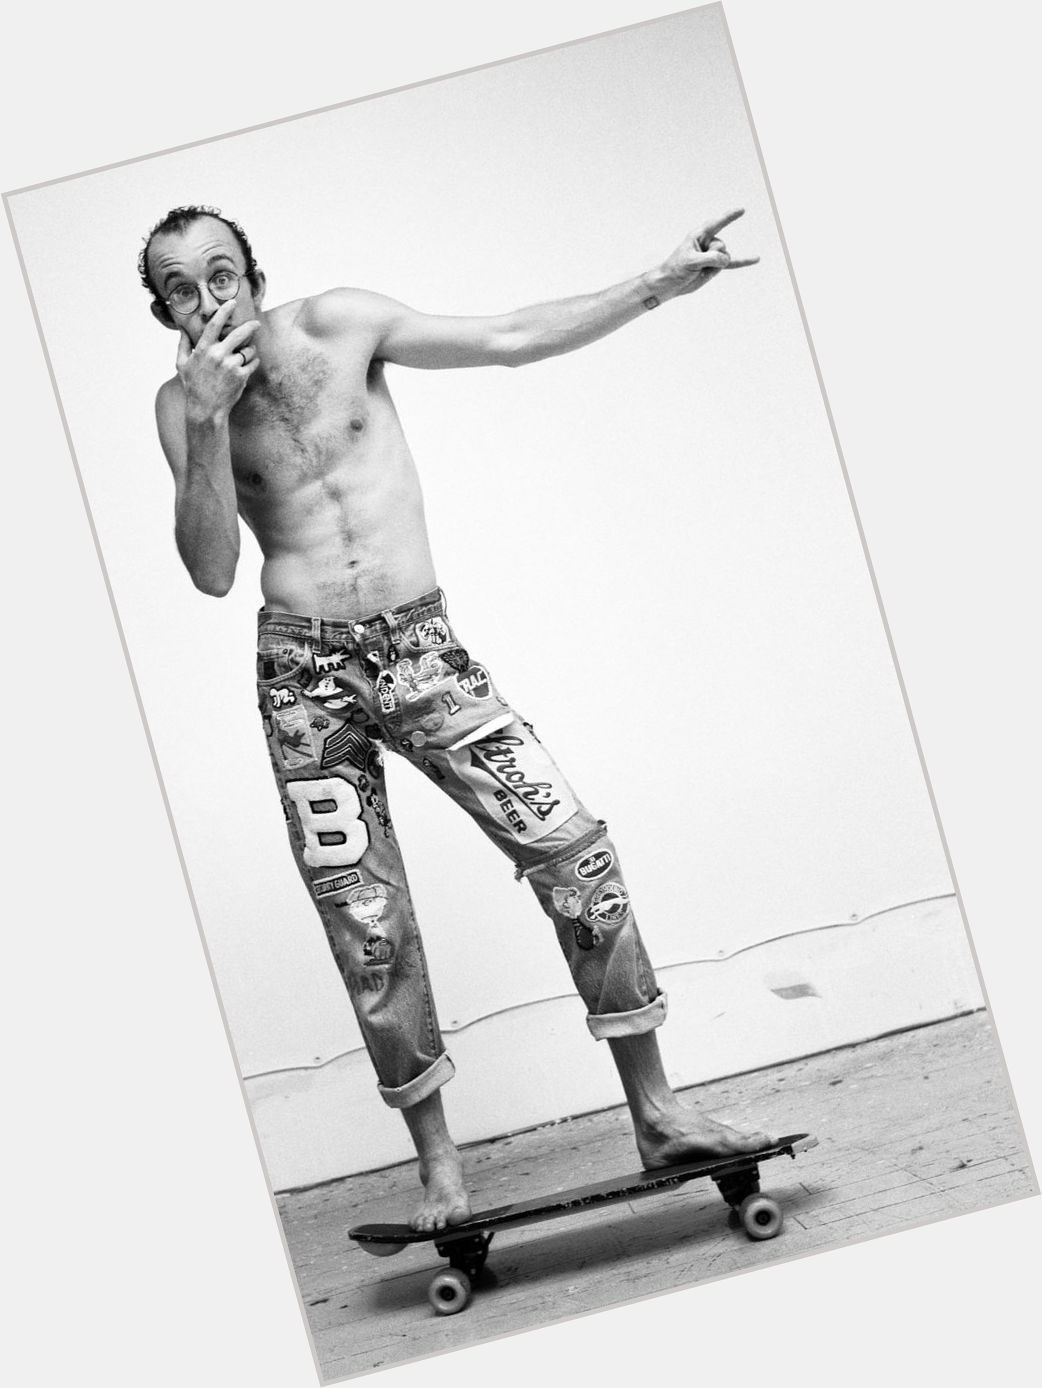 Http://fanpagepress.net/m/K/Keith Haring Full Body 3